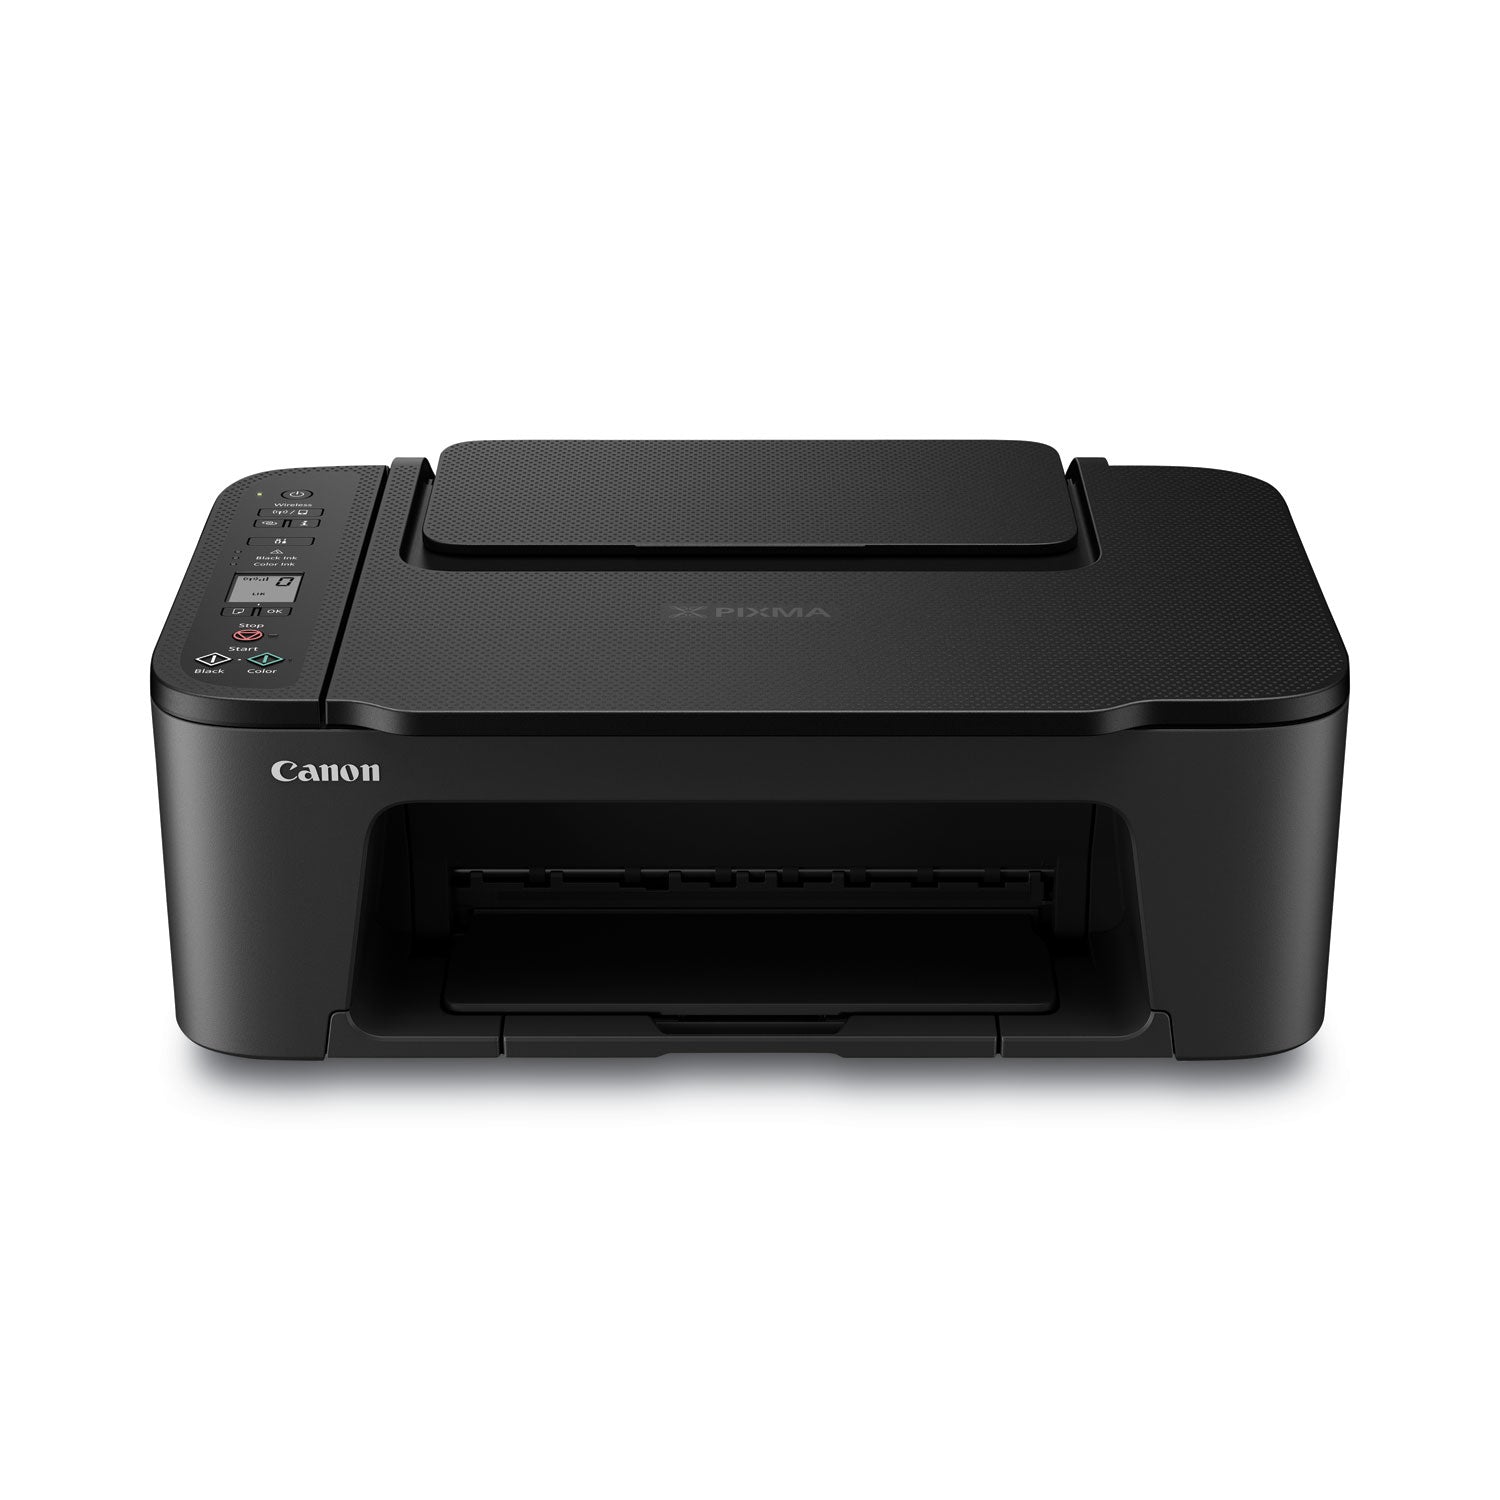 pixma-ts3520-wireless-all-in-one-printer-copy-print-scan-black_cnm4977c002 - 4